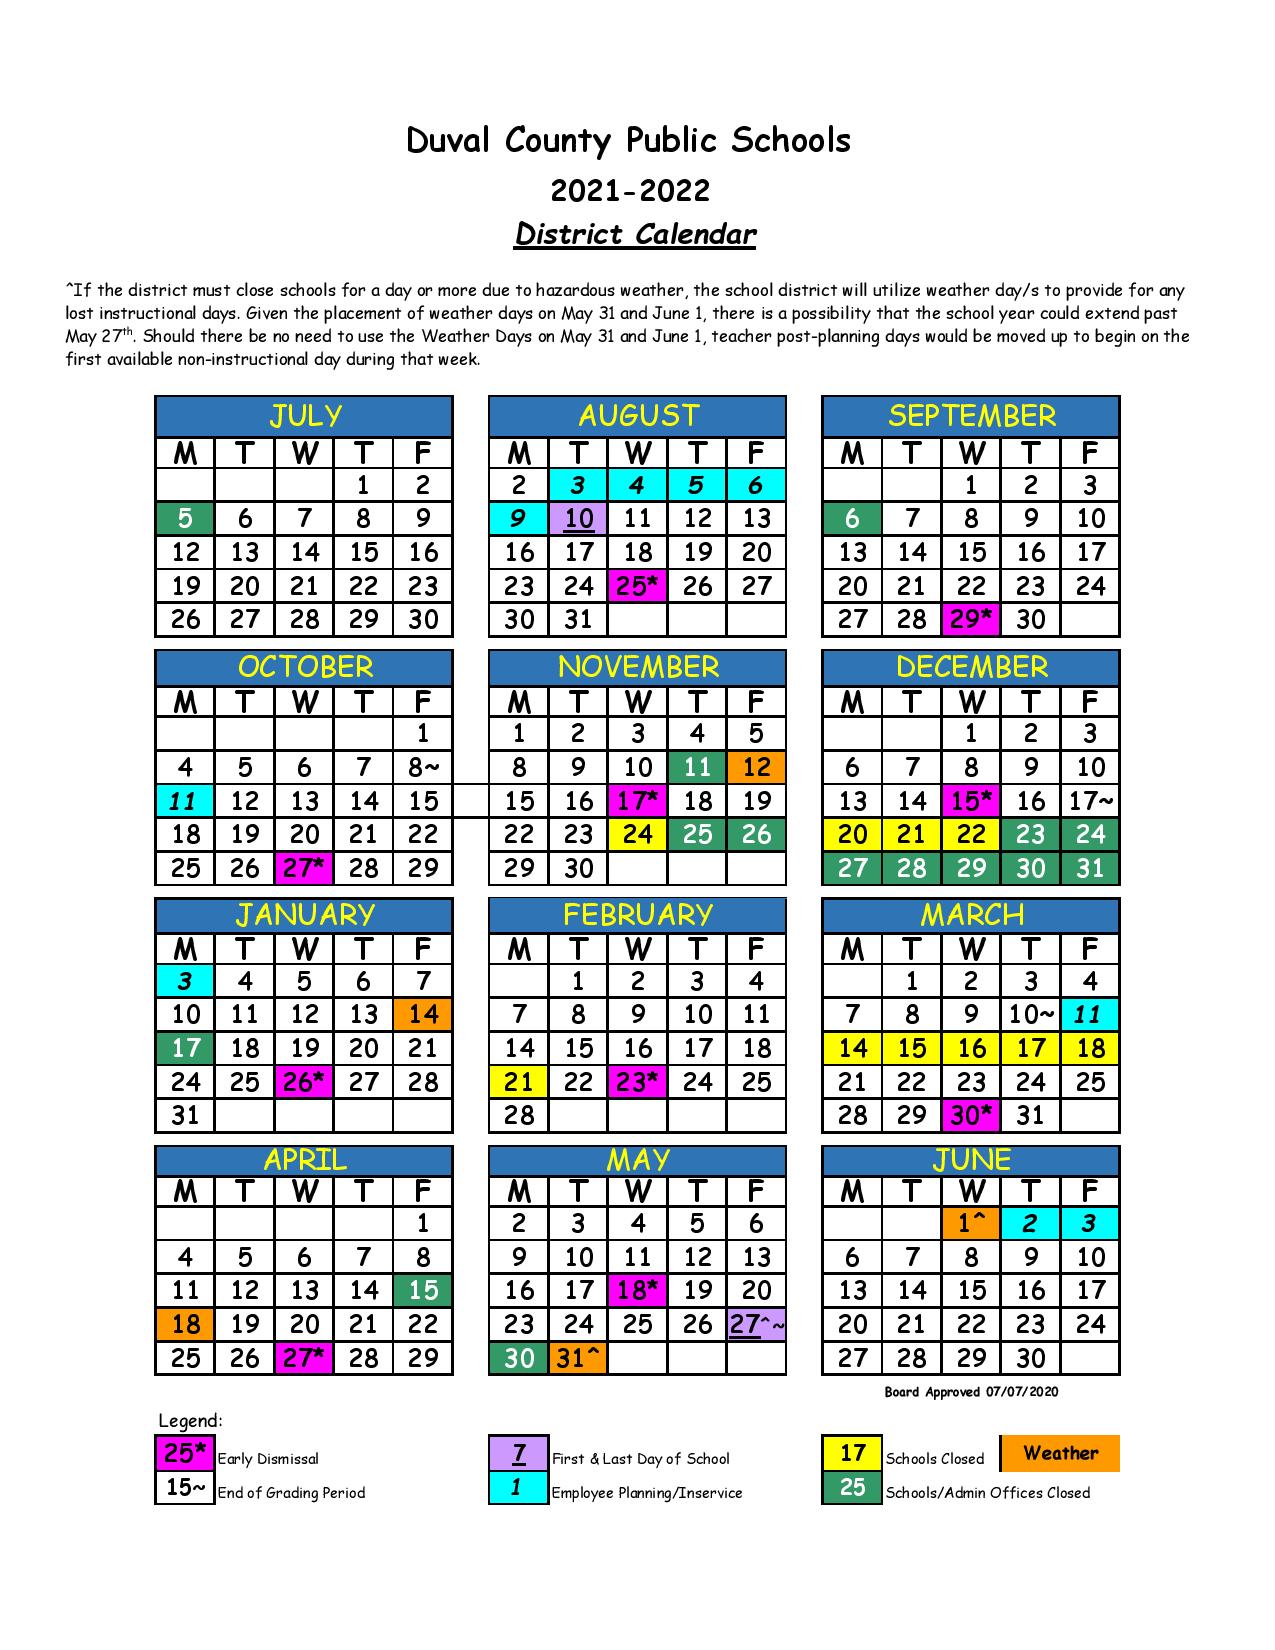 Duval County Public Schools Calendar 2021-2022 in PDF